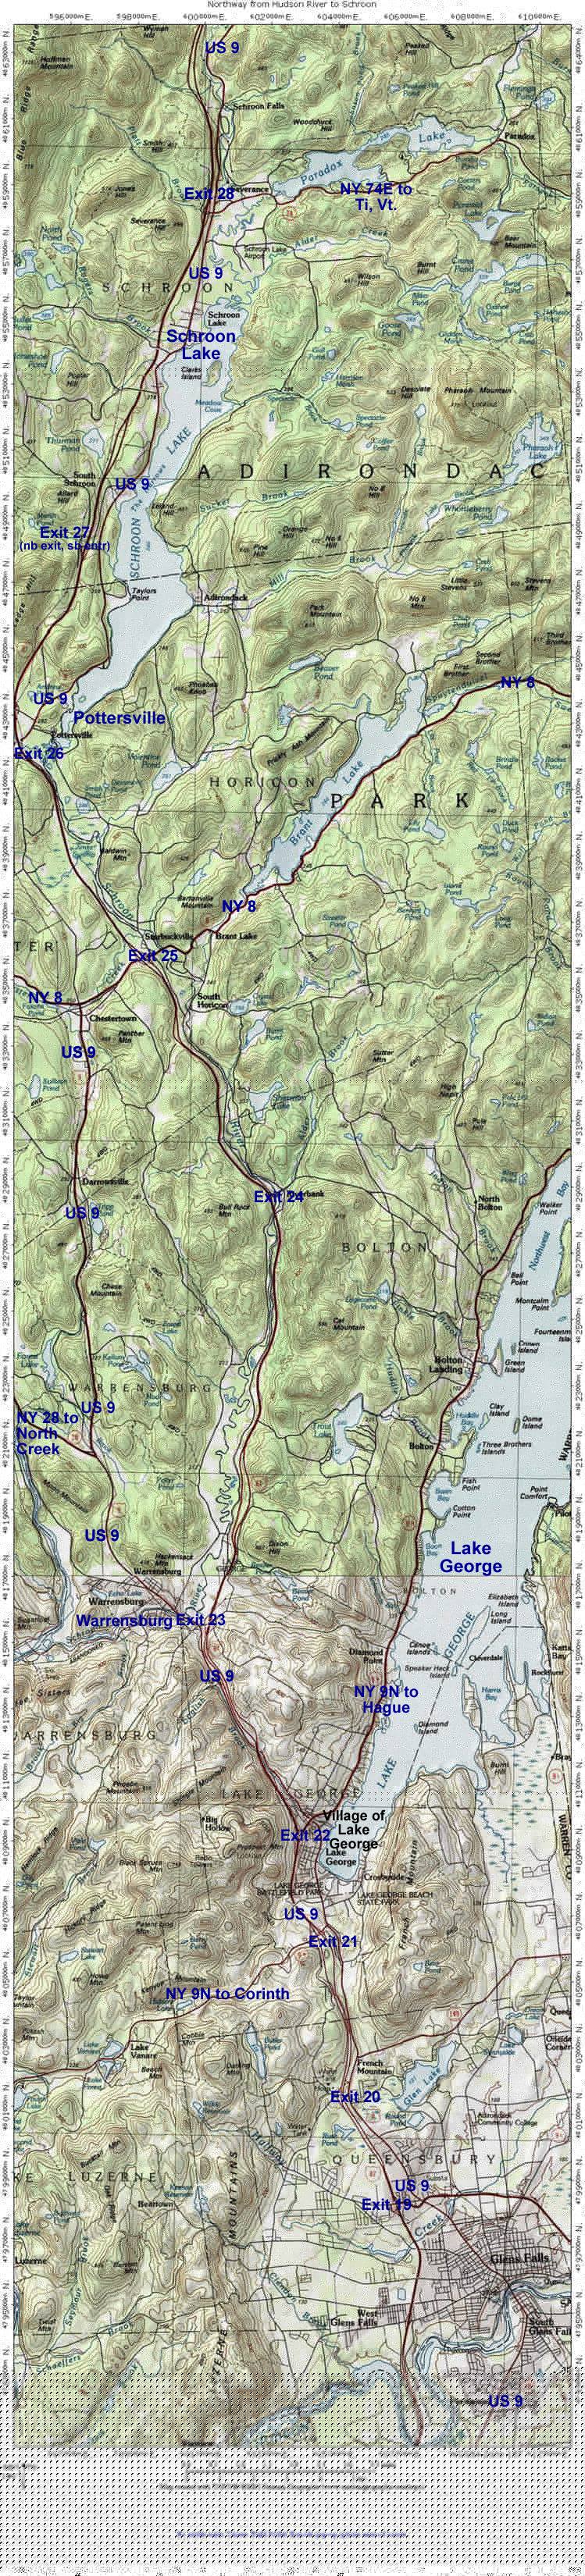 schroon lake contour map